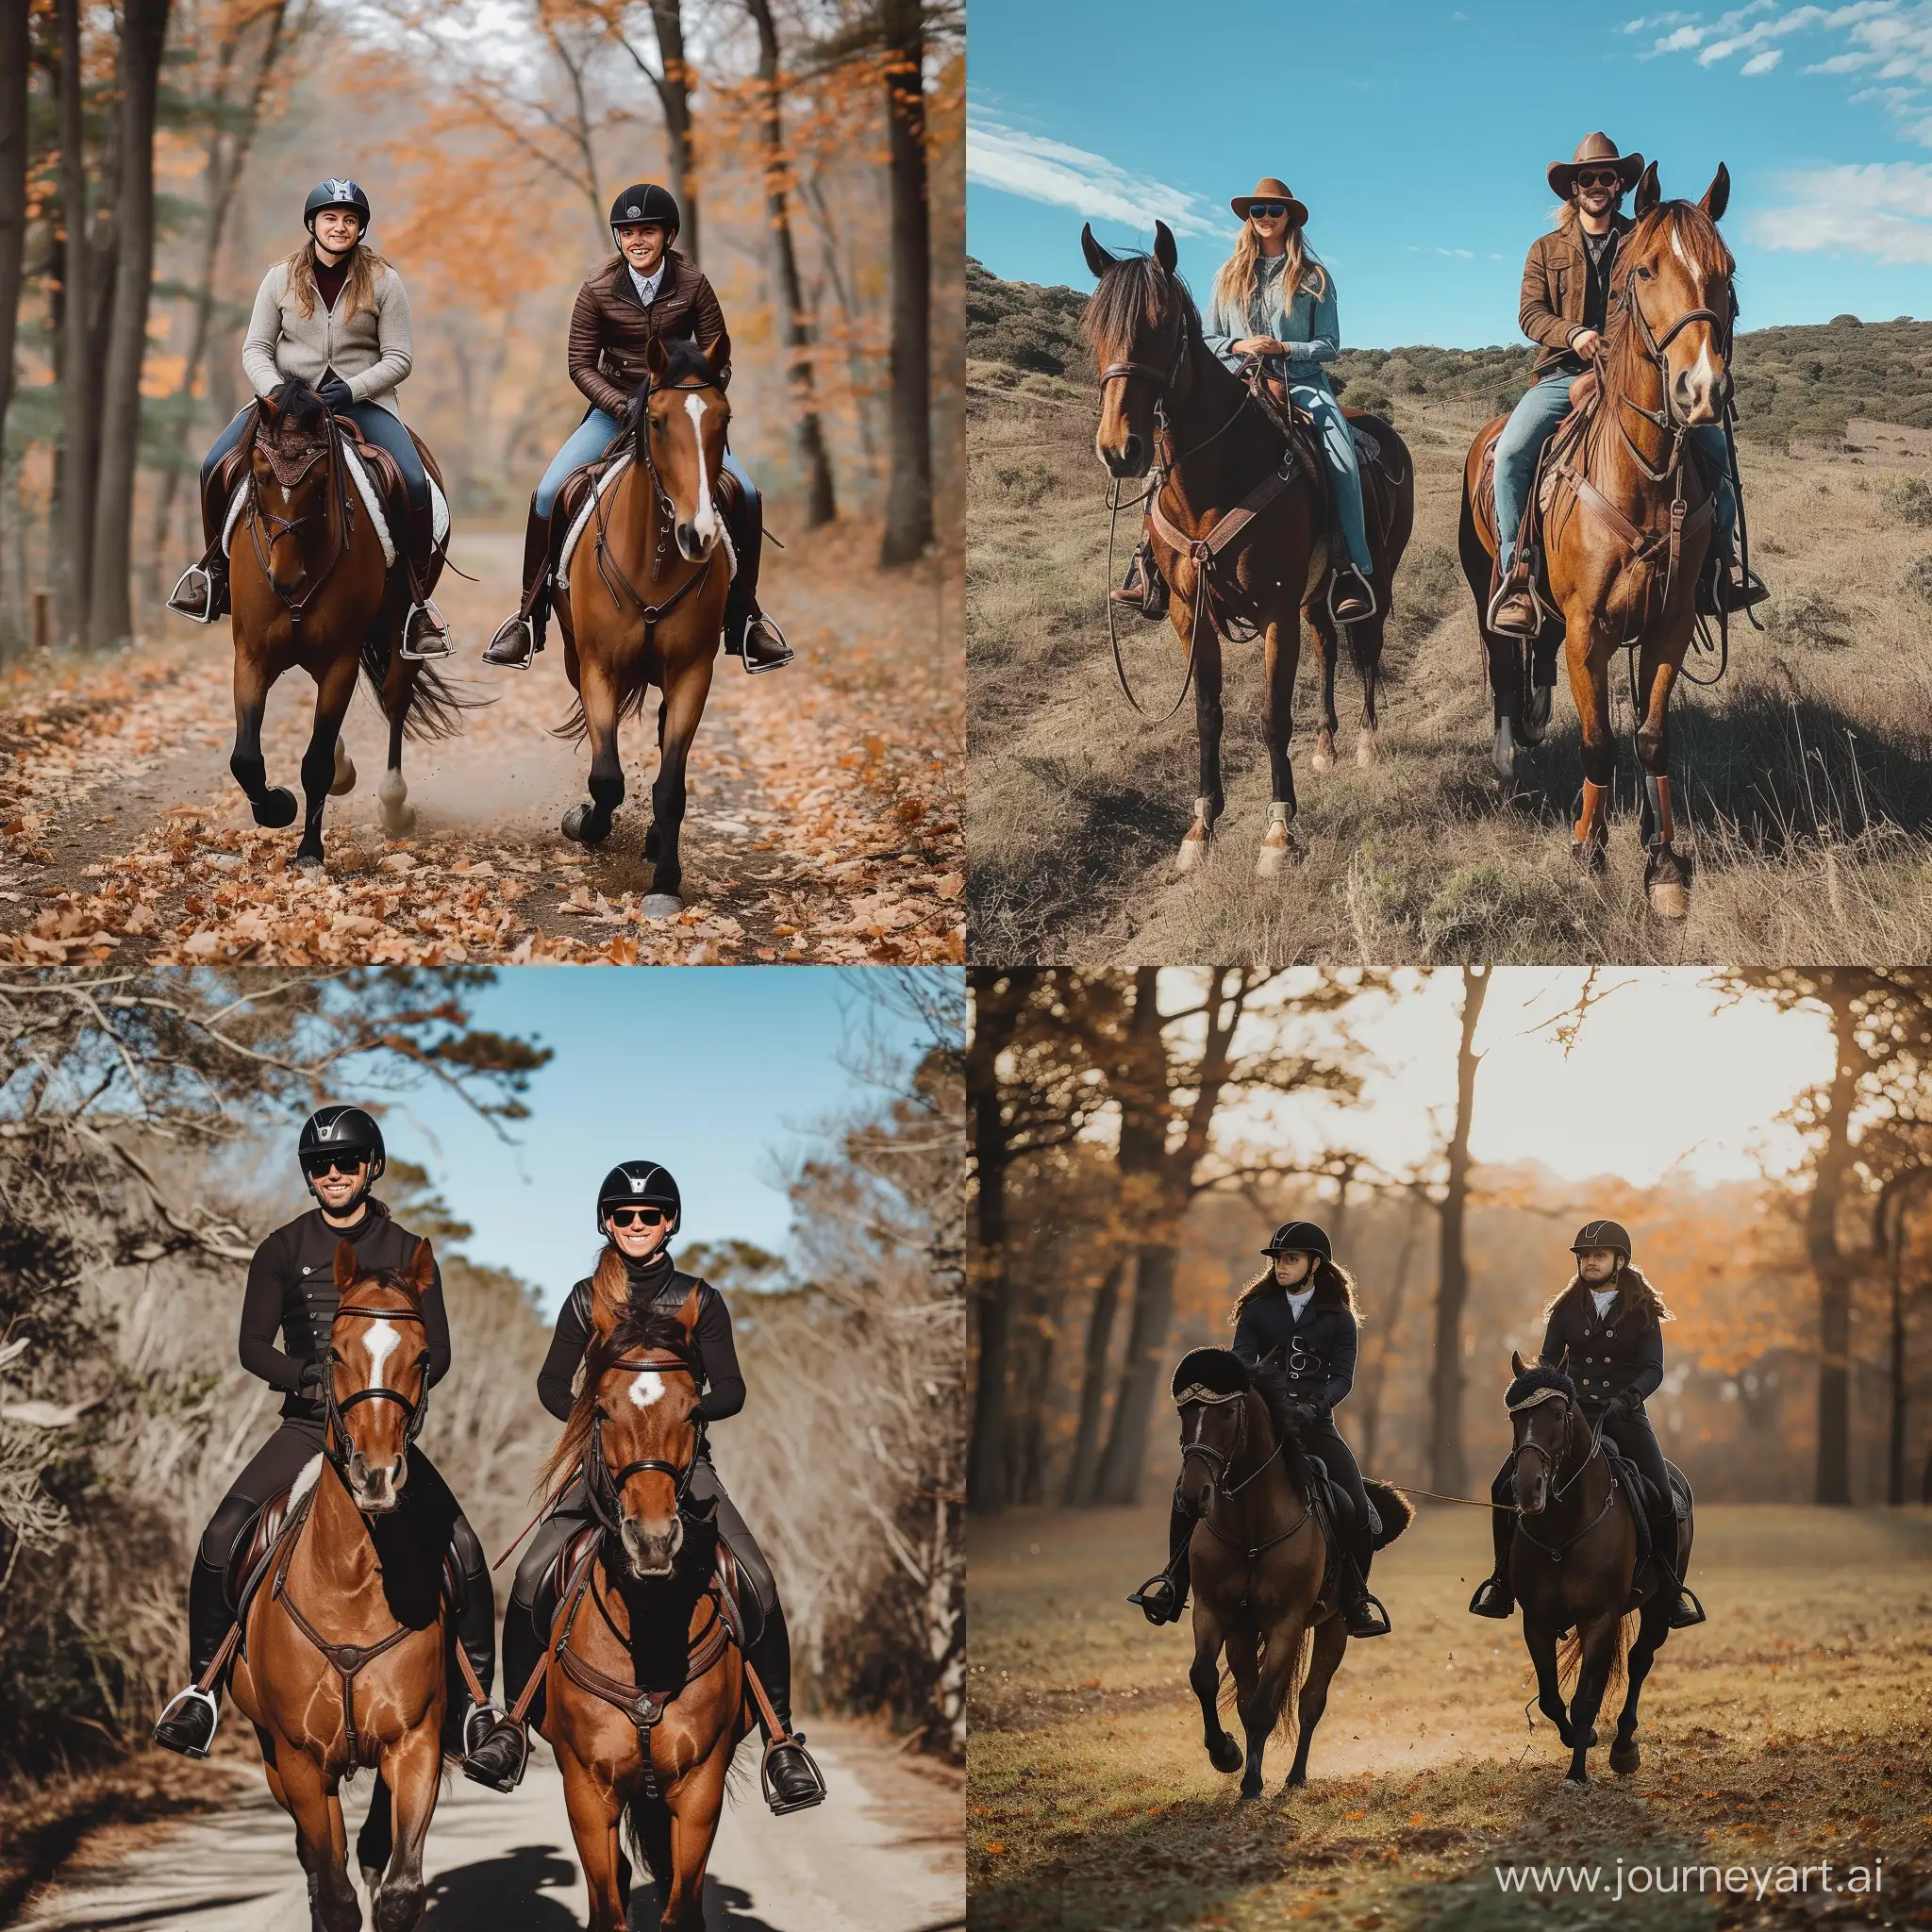 Friends-Horseback-Riding-in-Full-Riding-Gear